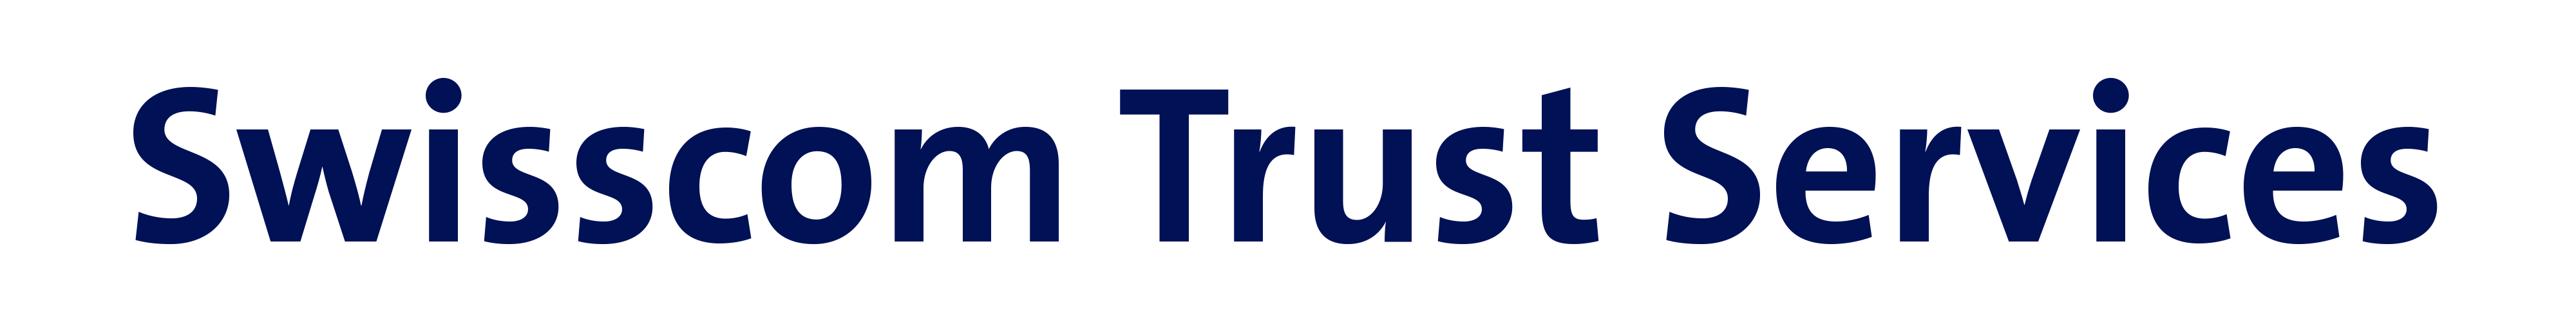 Image of Swisscom Trust Services logo